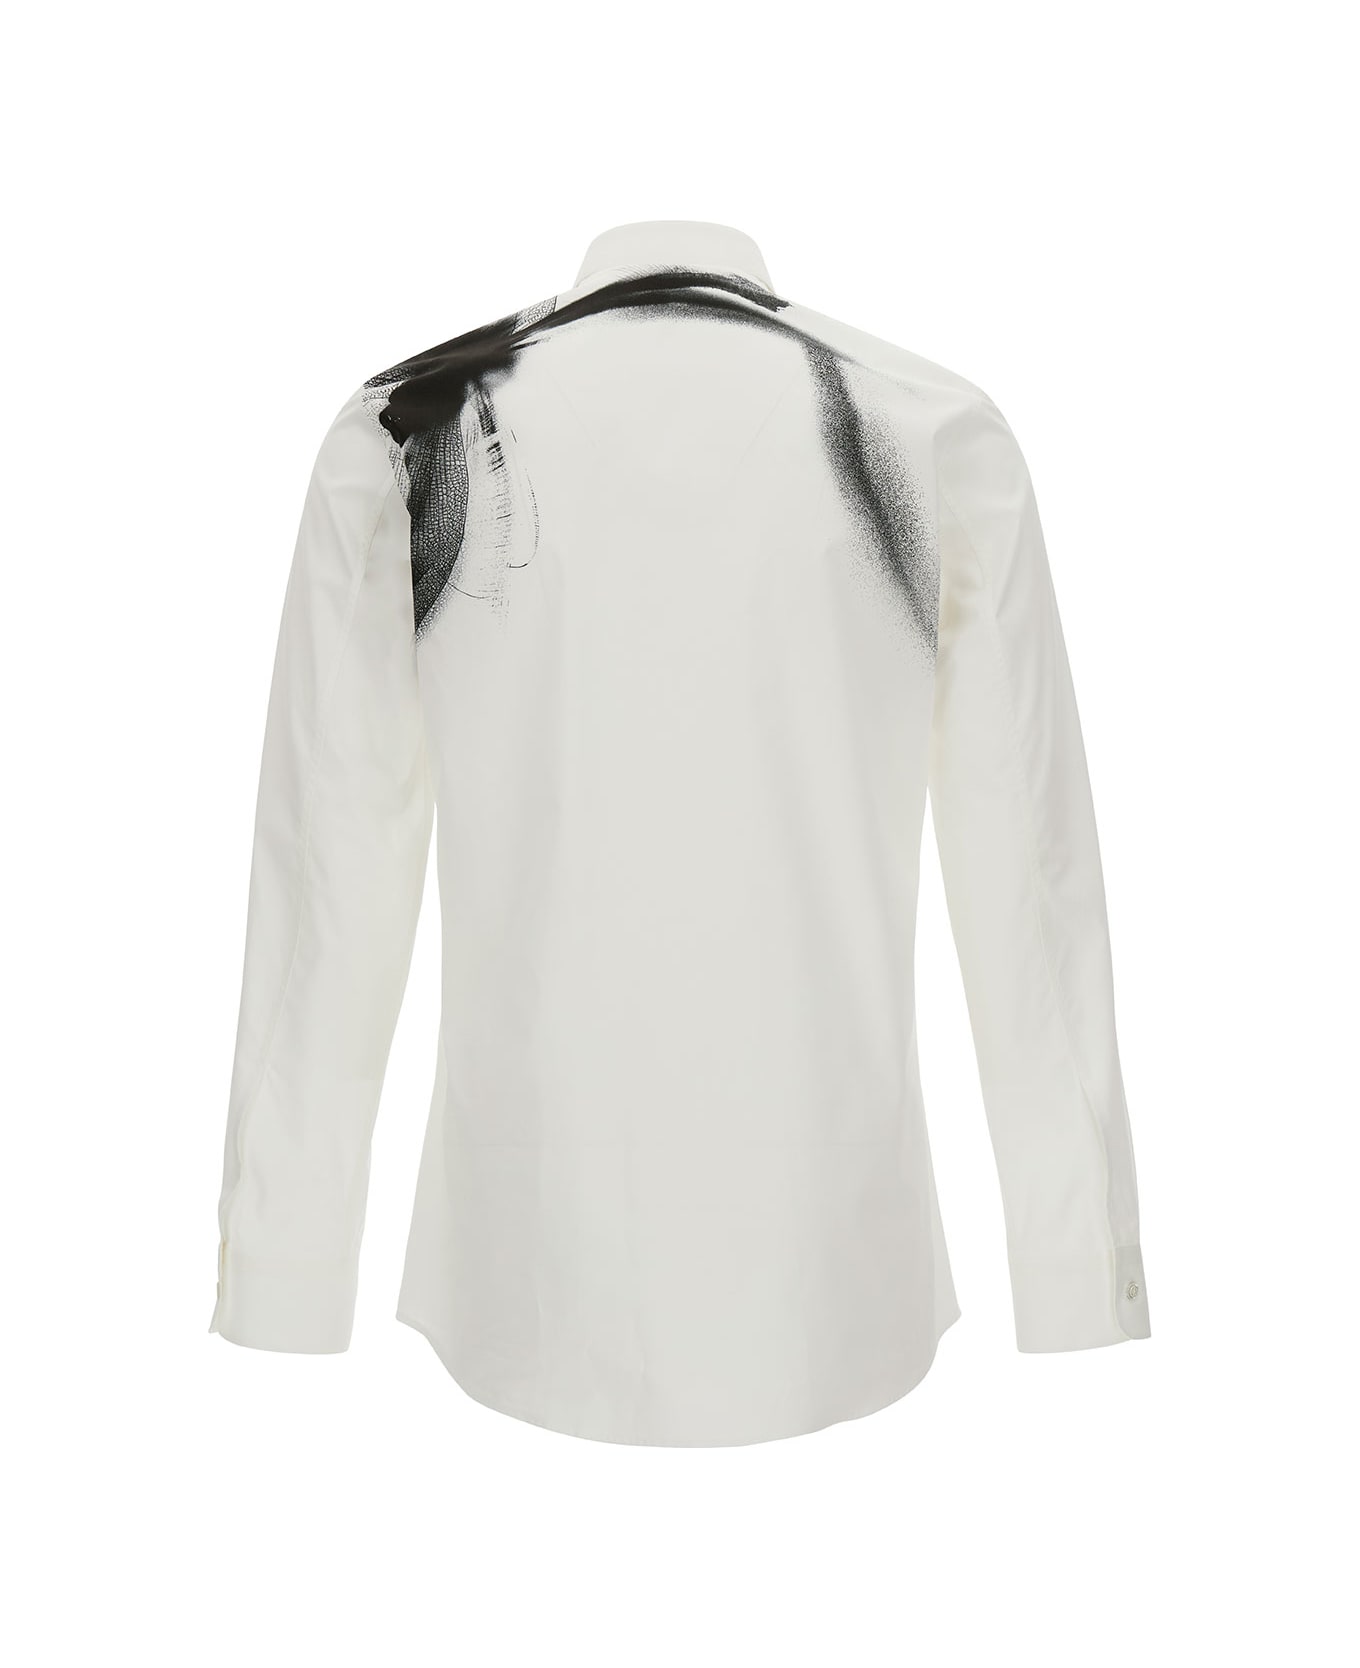 Alexander McQueen White Shirt With Contrasting Print In Cotton Man - WHITEBLACK シャツ